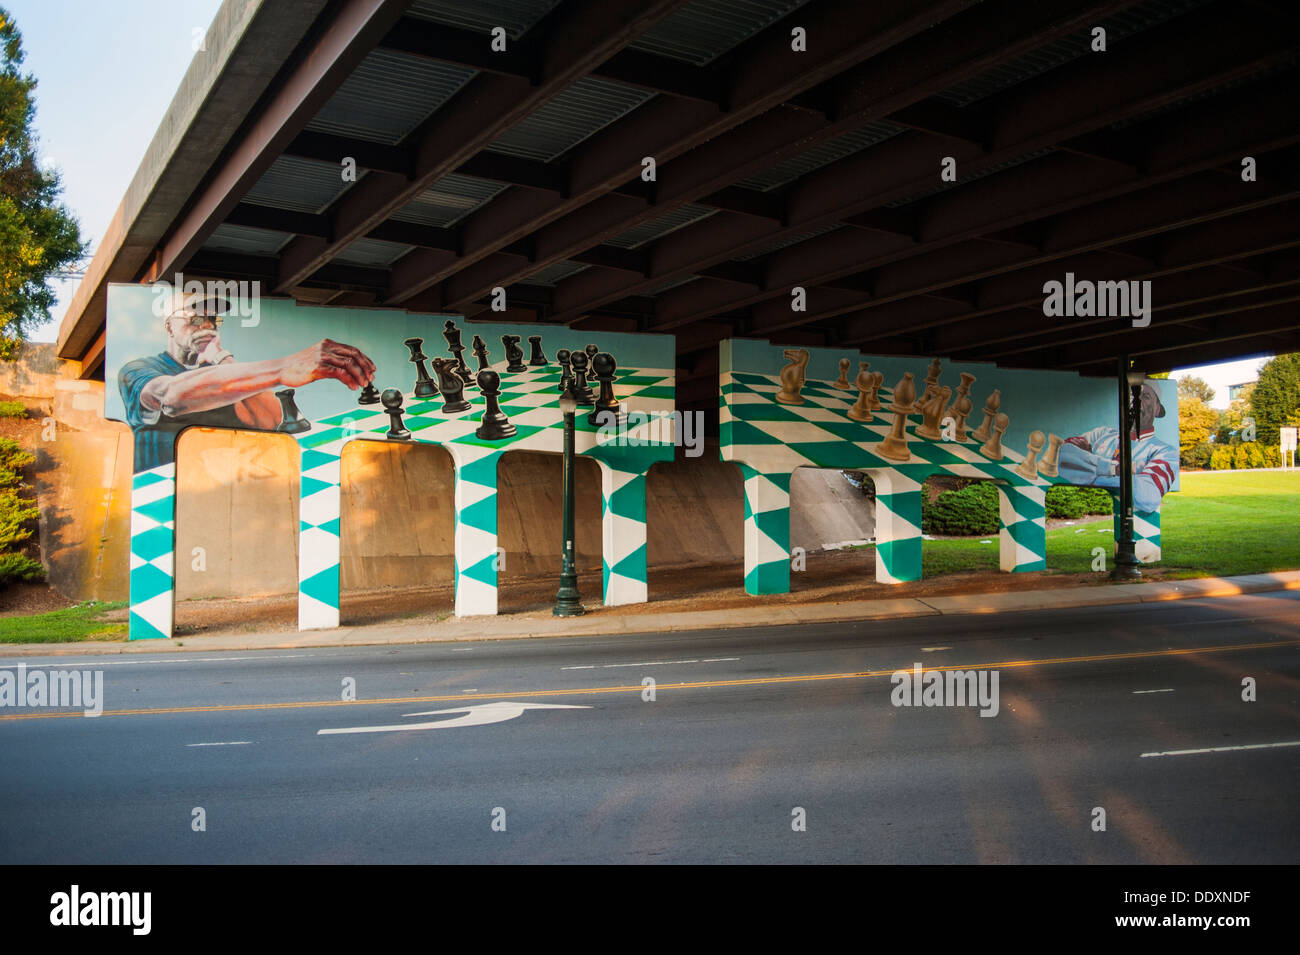 Graffiti mural under a bridge in Asheville, North Carolina Stock Photo